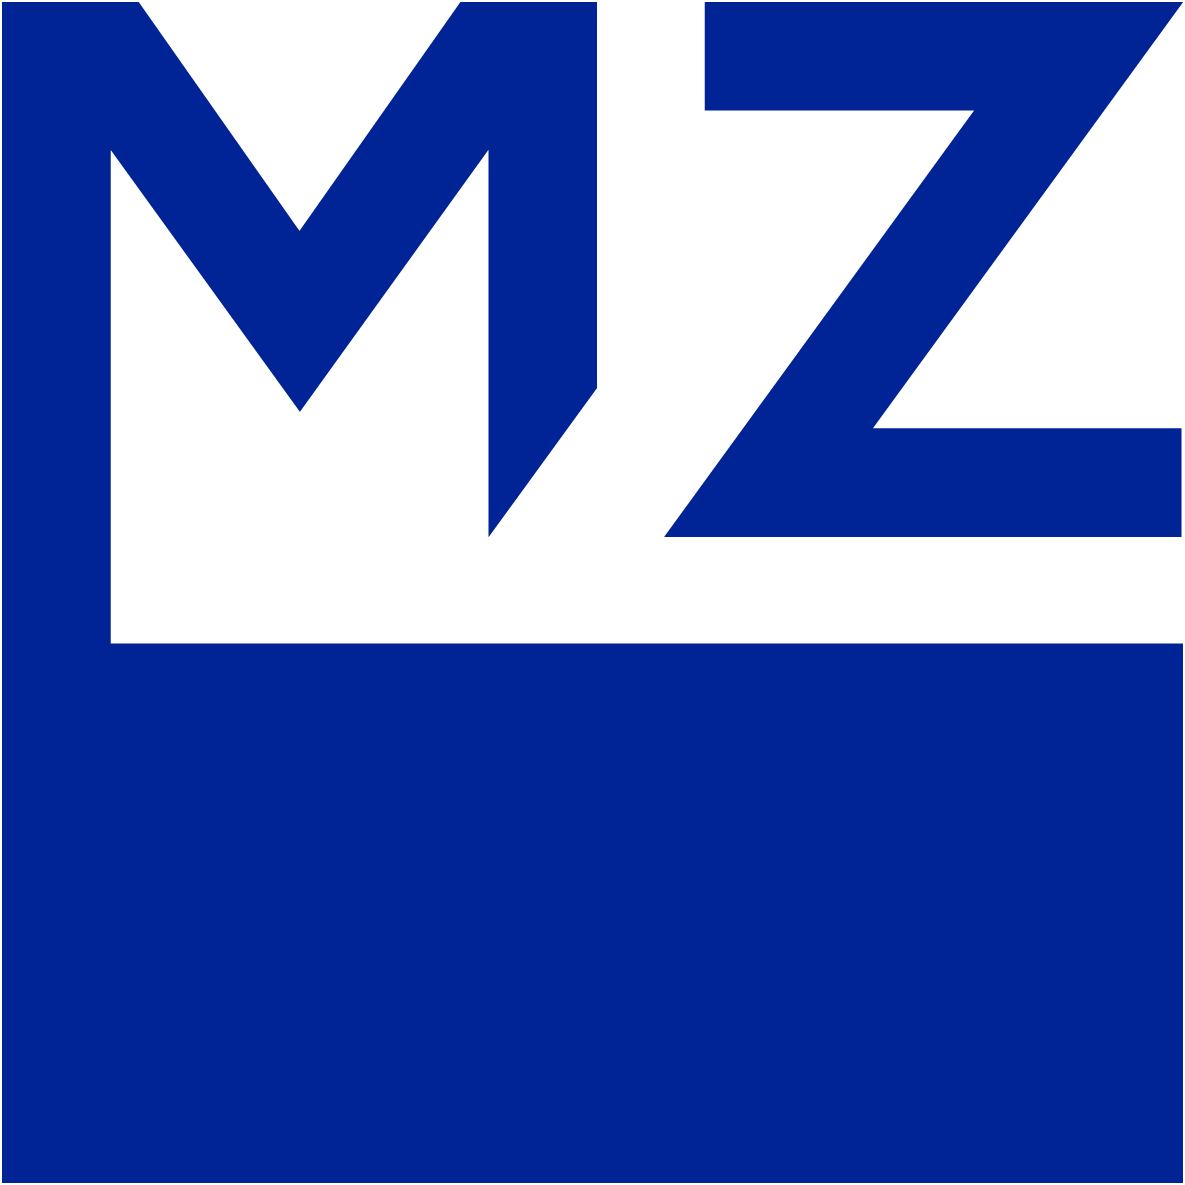 Logo Mael & Zélie - Consultant Webmarketing - Lille